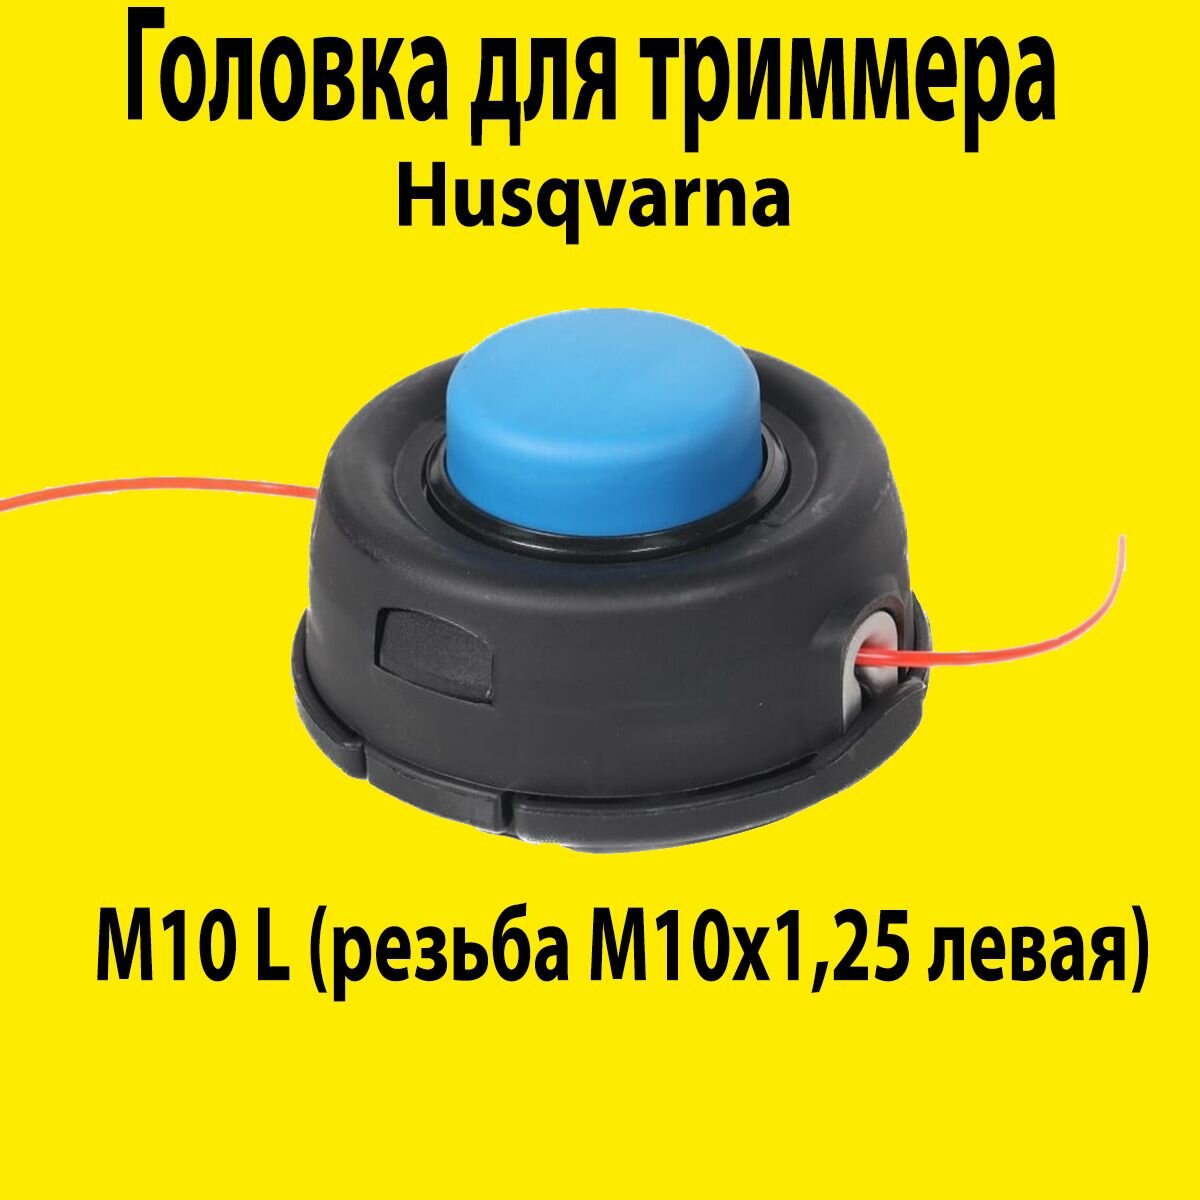 Катушка с леской (шпуля) для бензокосы (триммера) Аналог HUSQVARNA T35 M10х1,25 левая резьба